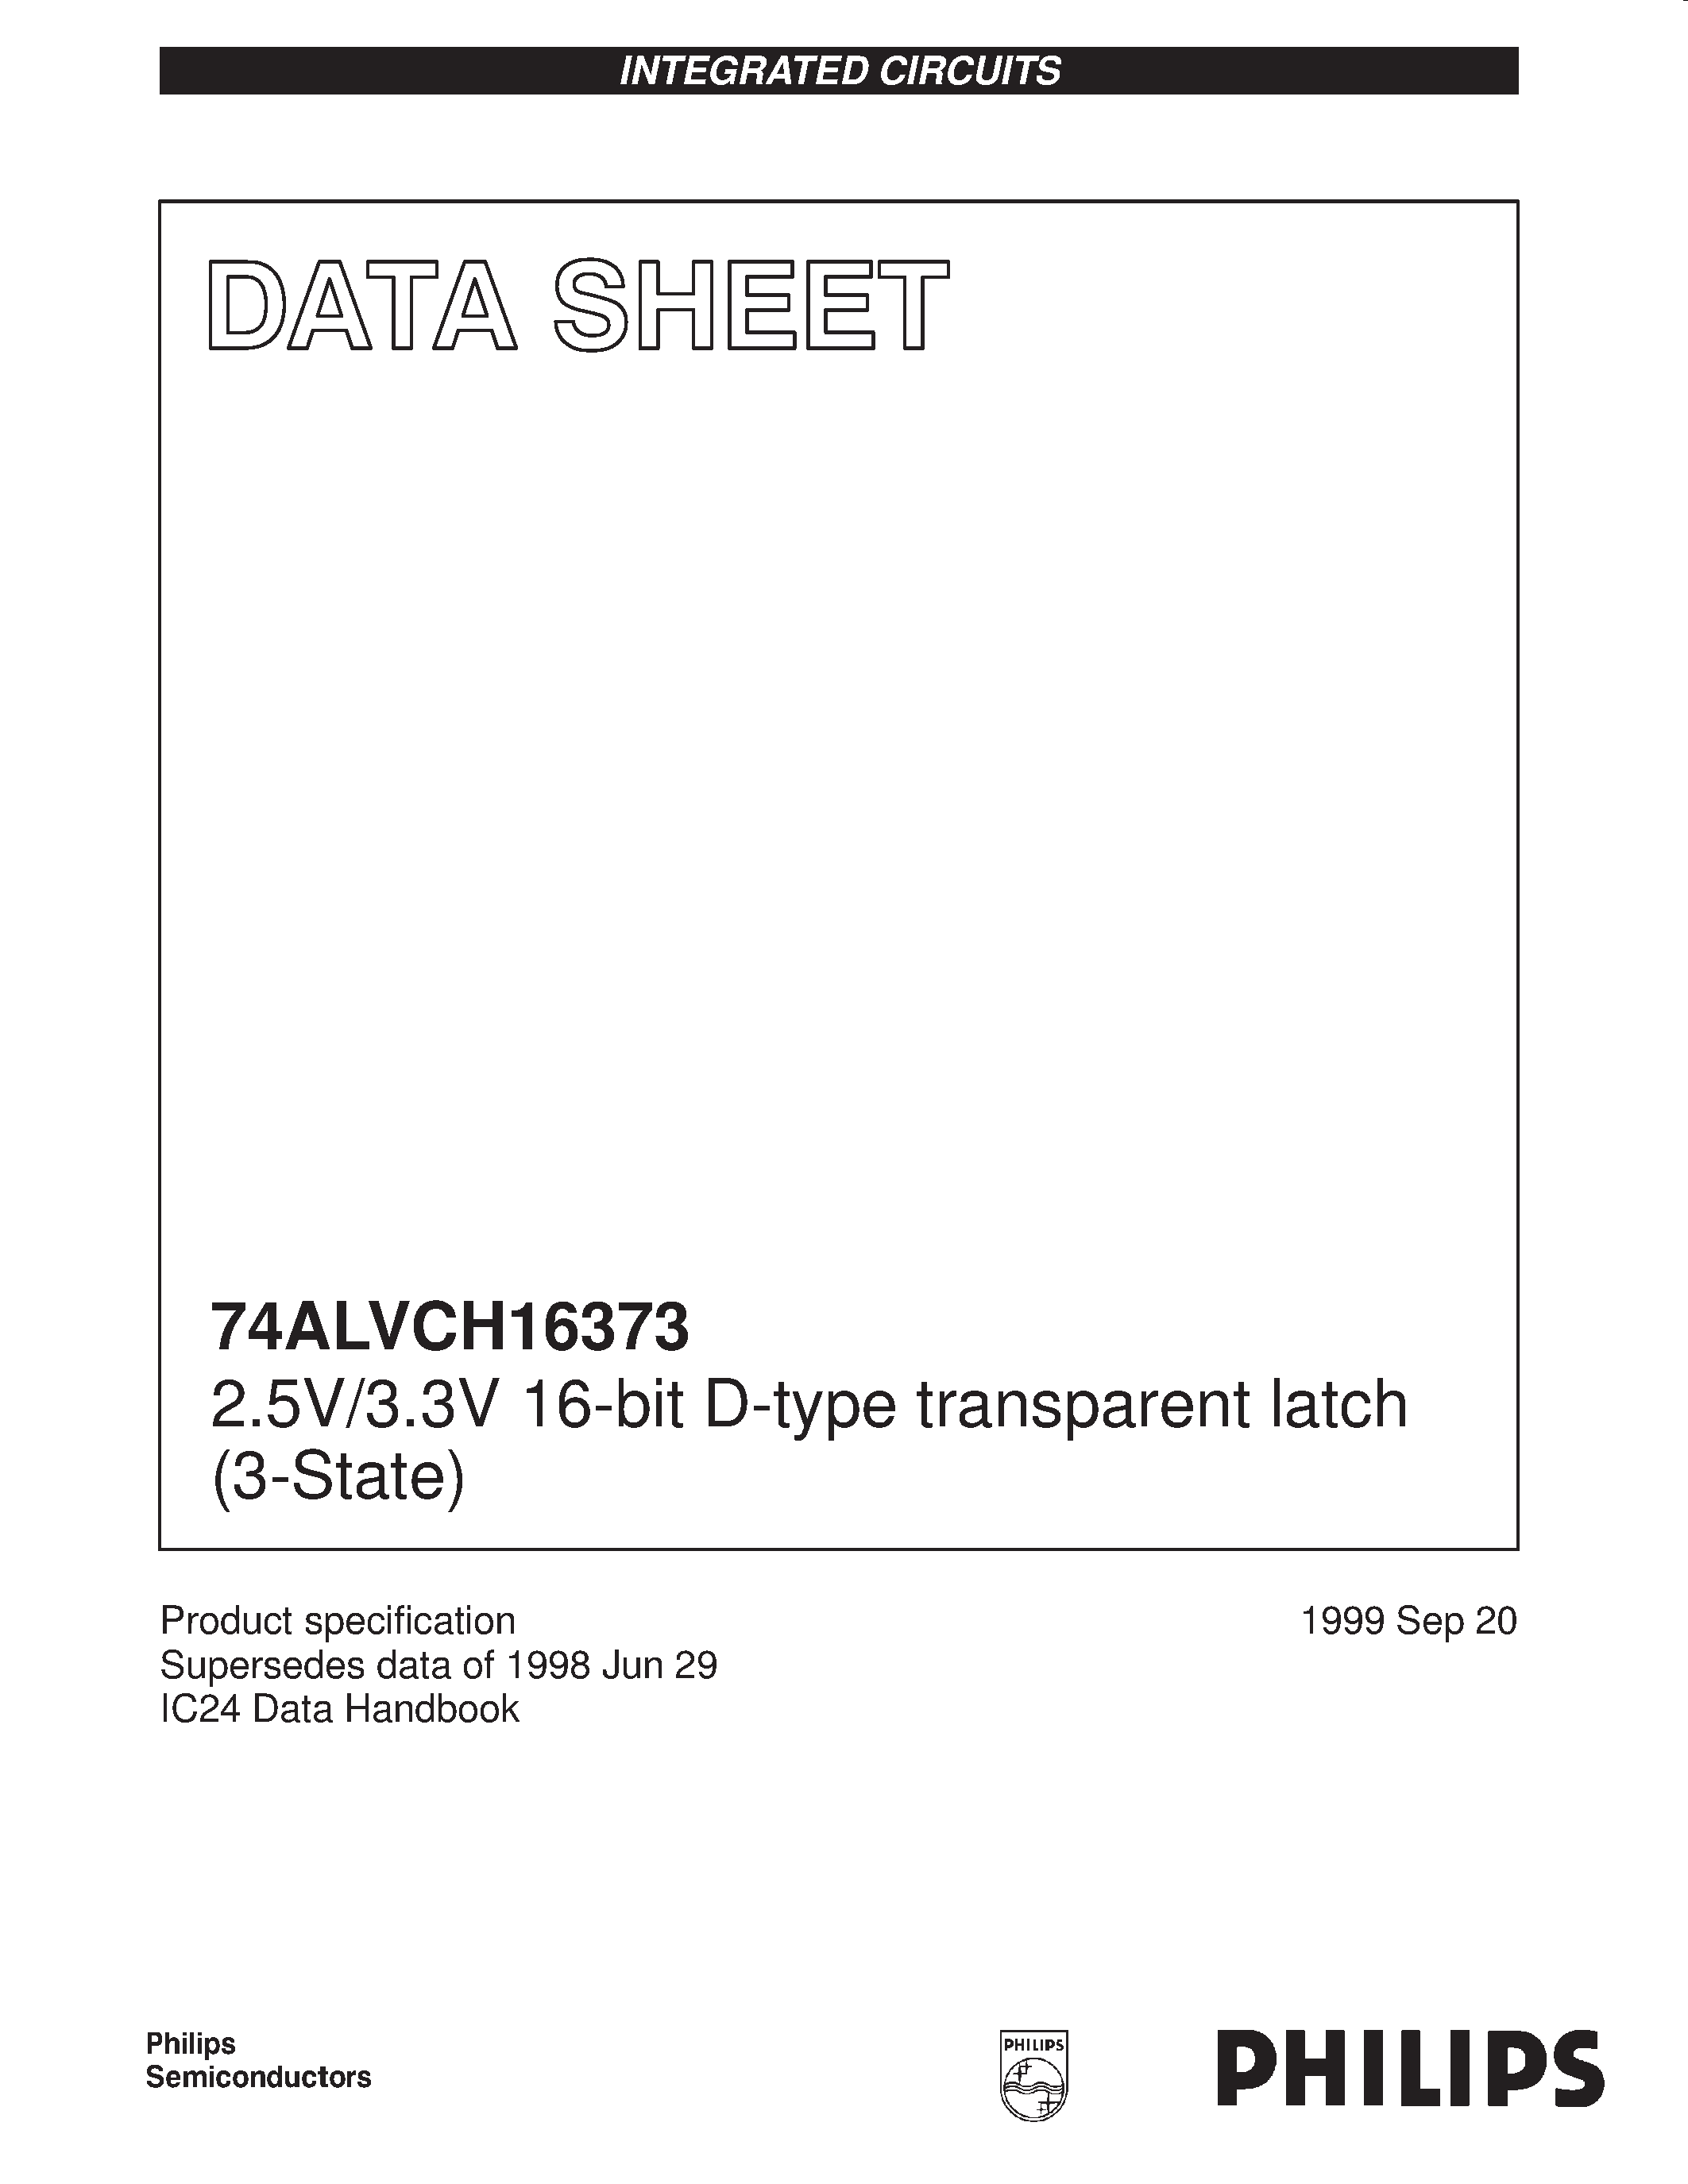 Datasheet 74ALVCH16373DGG - 2.5V/3.3V 16-bit D-type transparent latch 3-State page 1